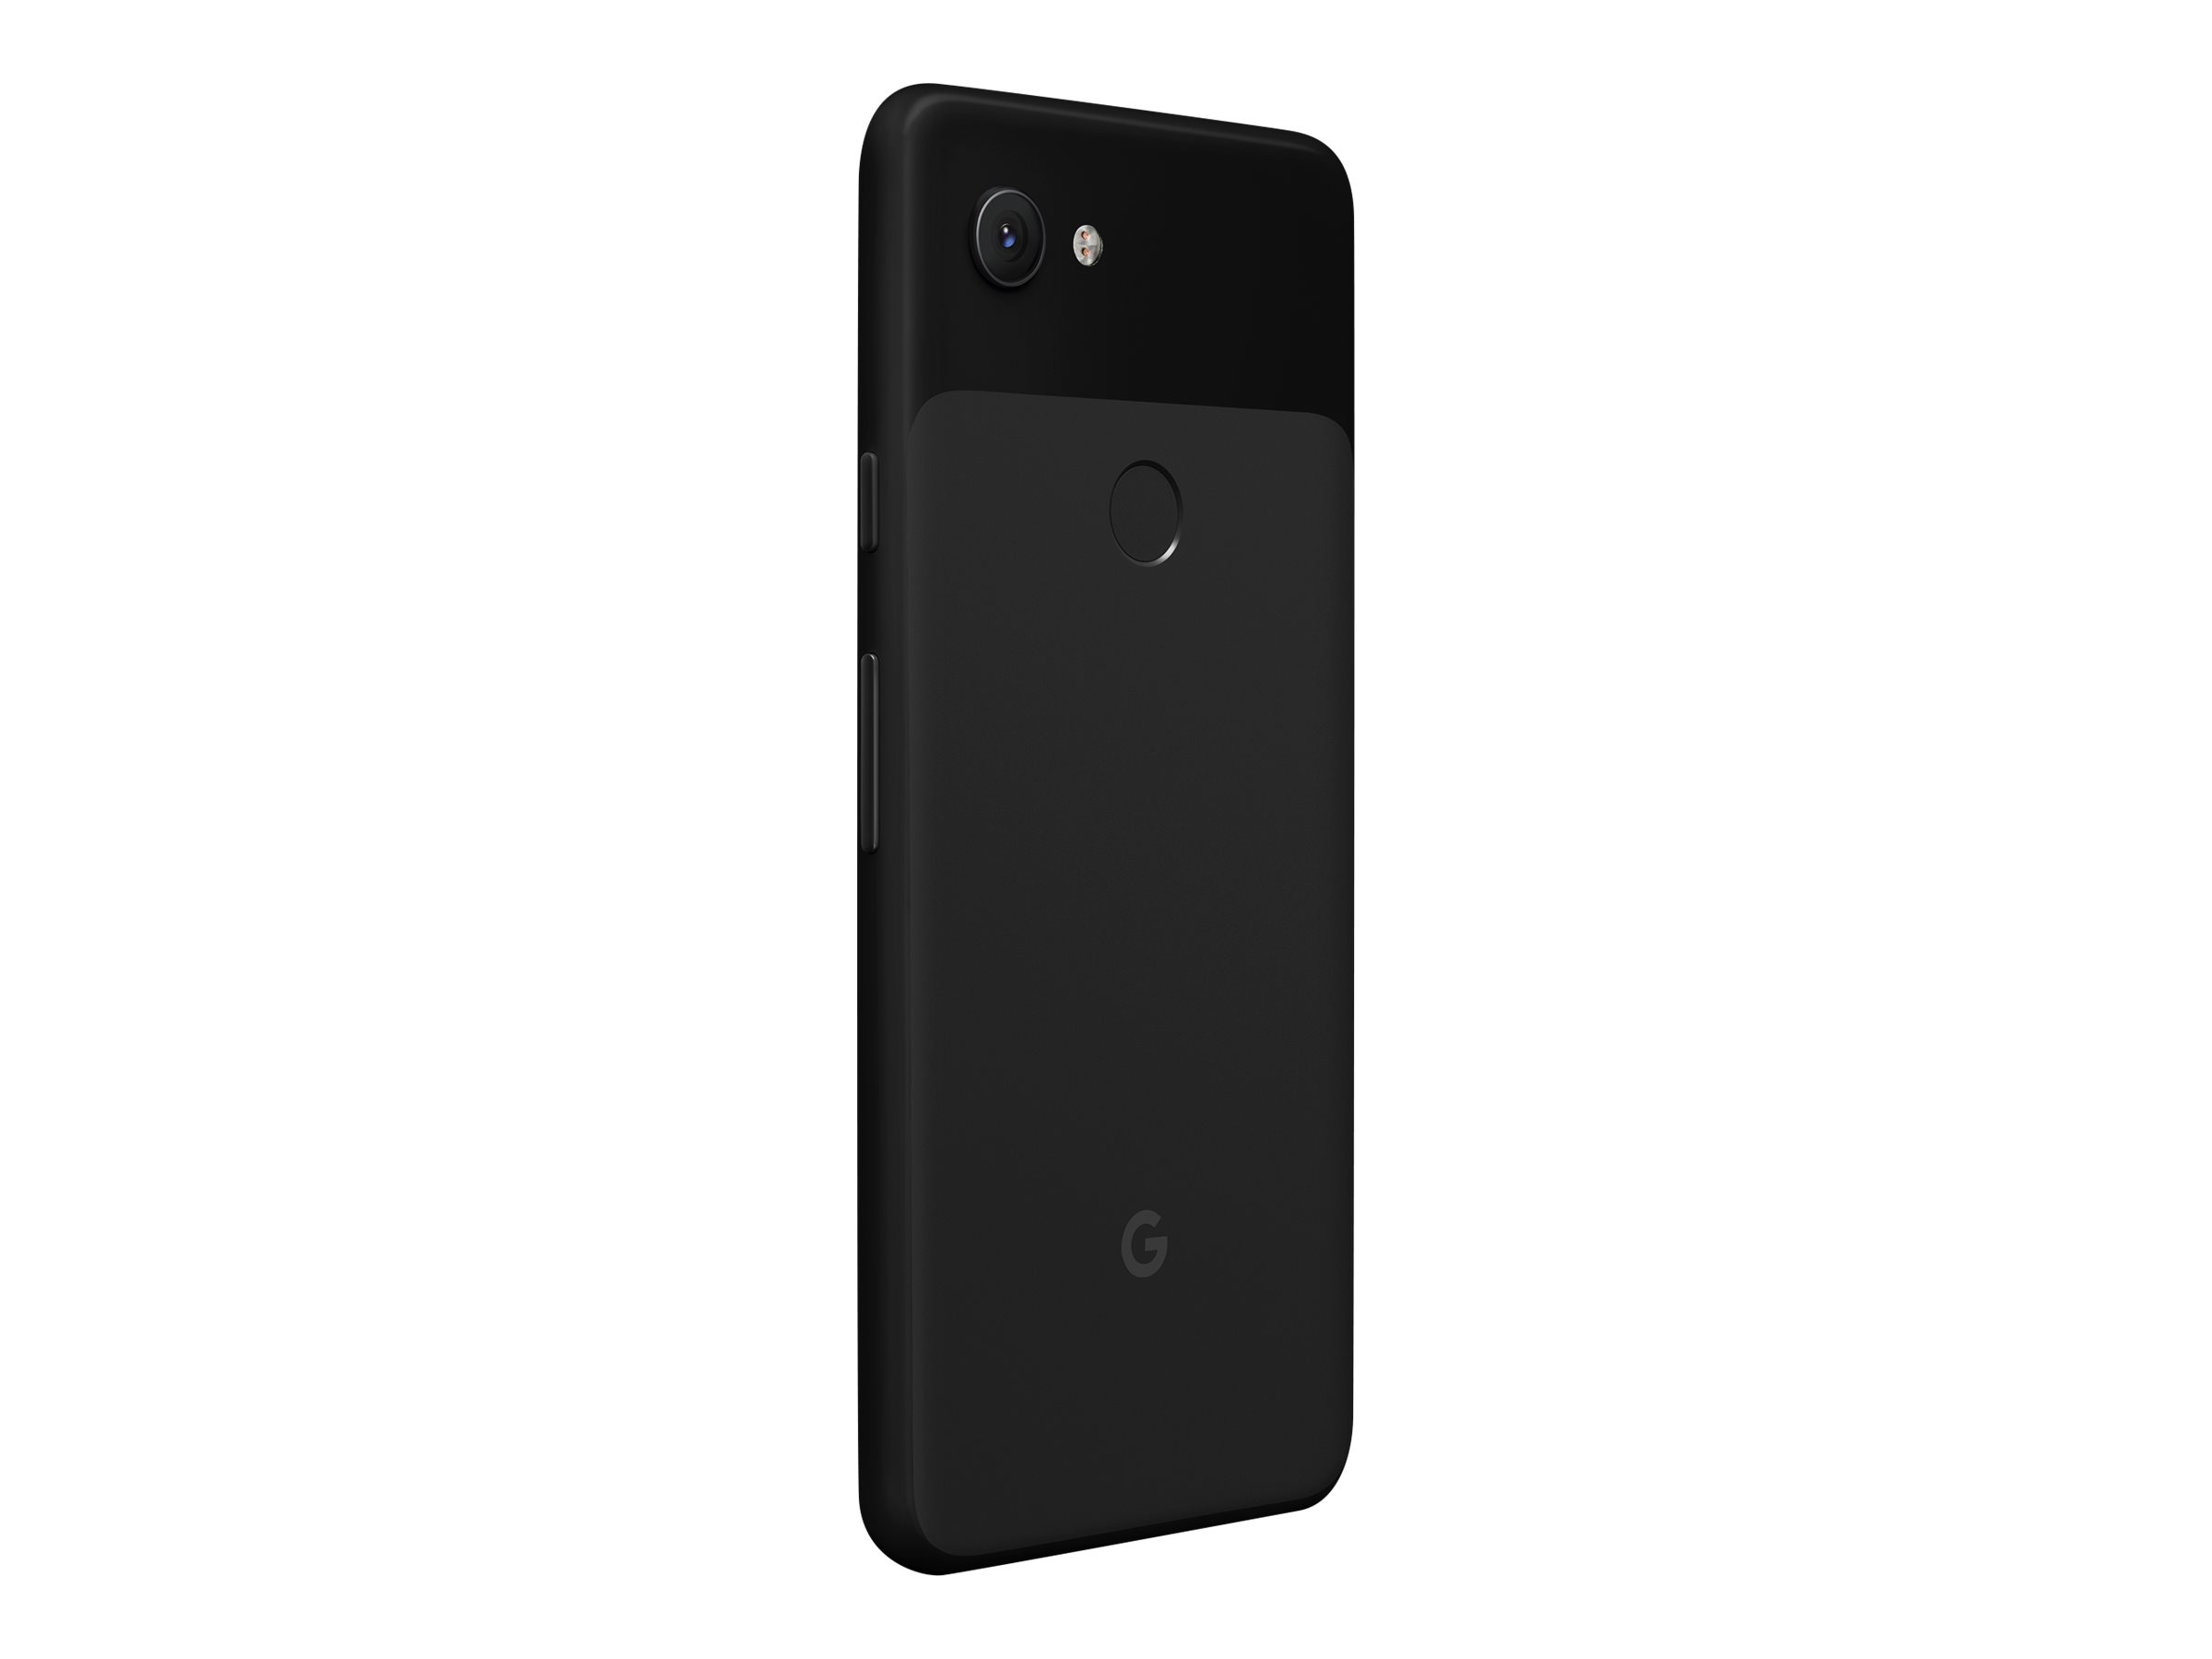 Google Pixel 3a XL - 4G smartphone - RAM 4 GB / Internal Memory 64 GB - OLED display - 6" - 2160 x 1080 pixels - rear camera 12.2 MP - front camera 8 MP - Verizon - just black - image 2 of 4